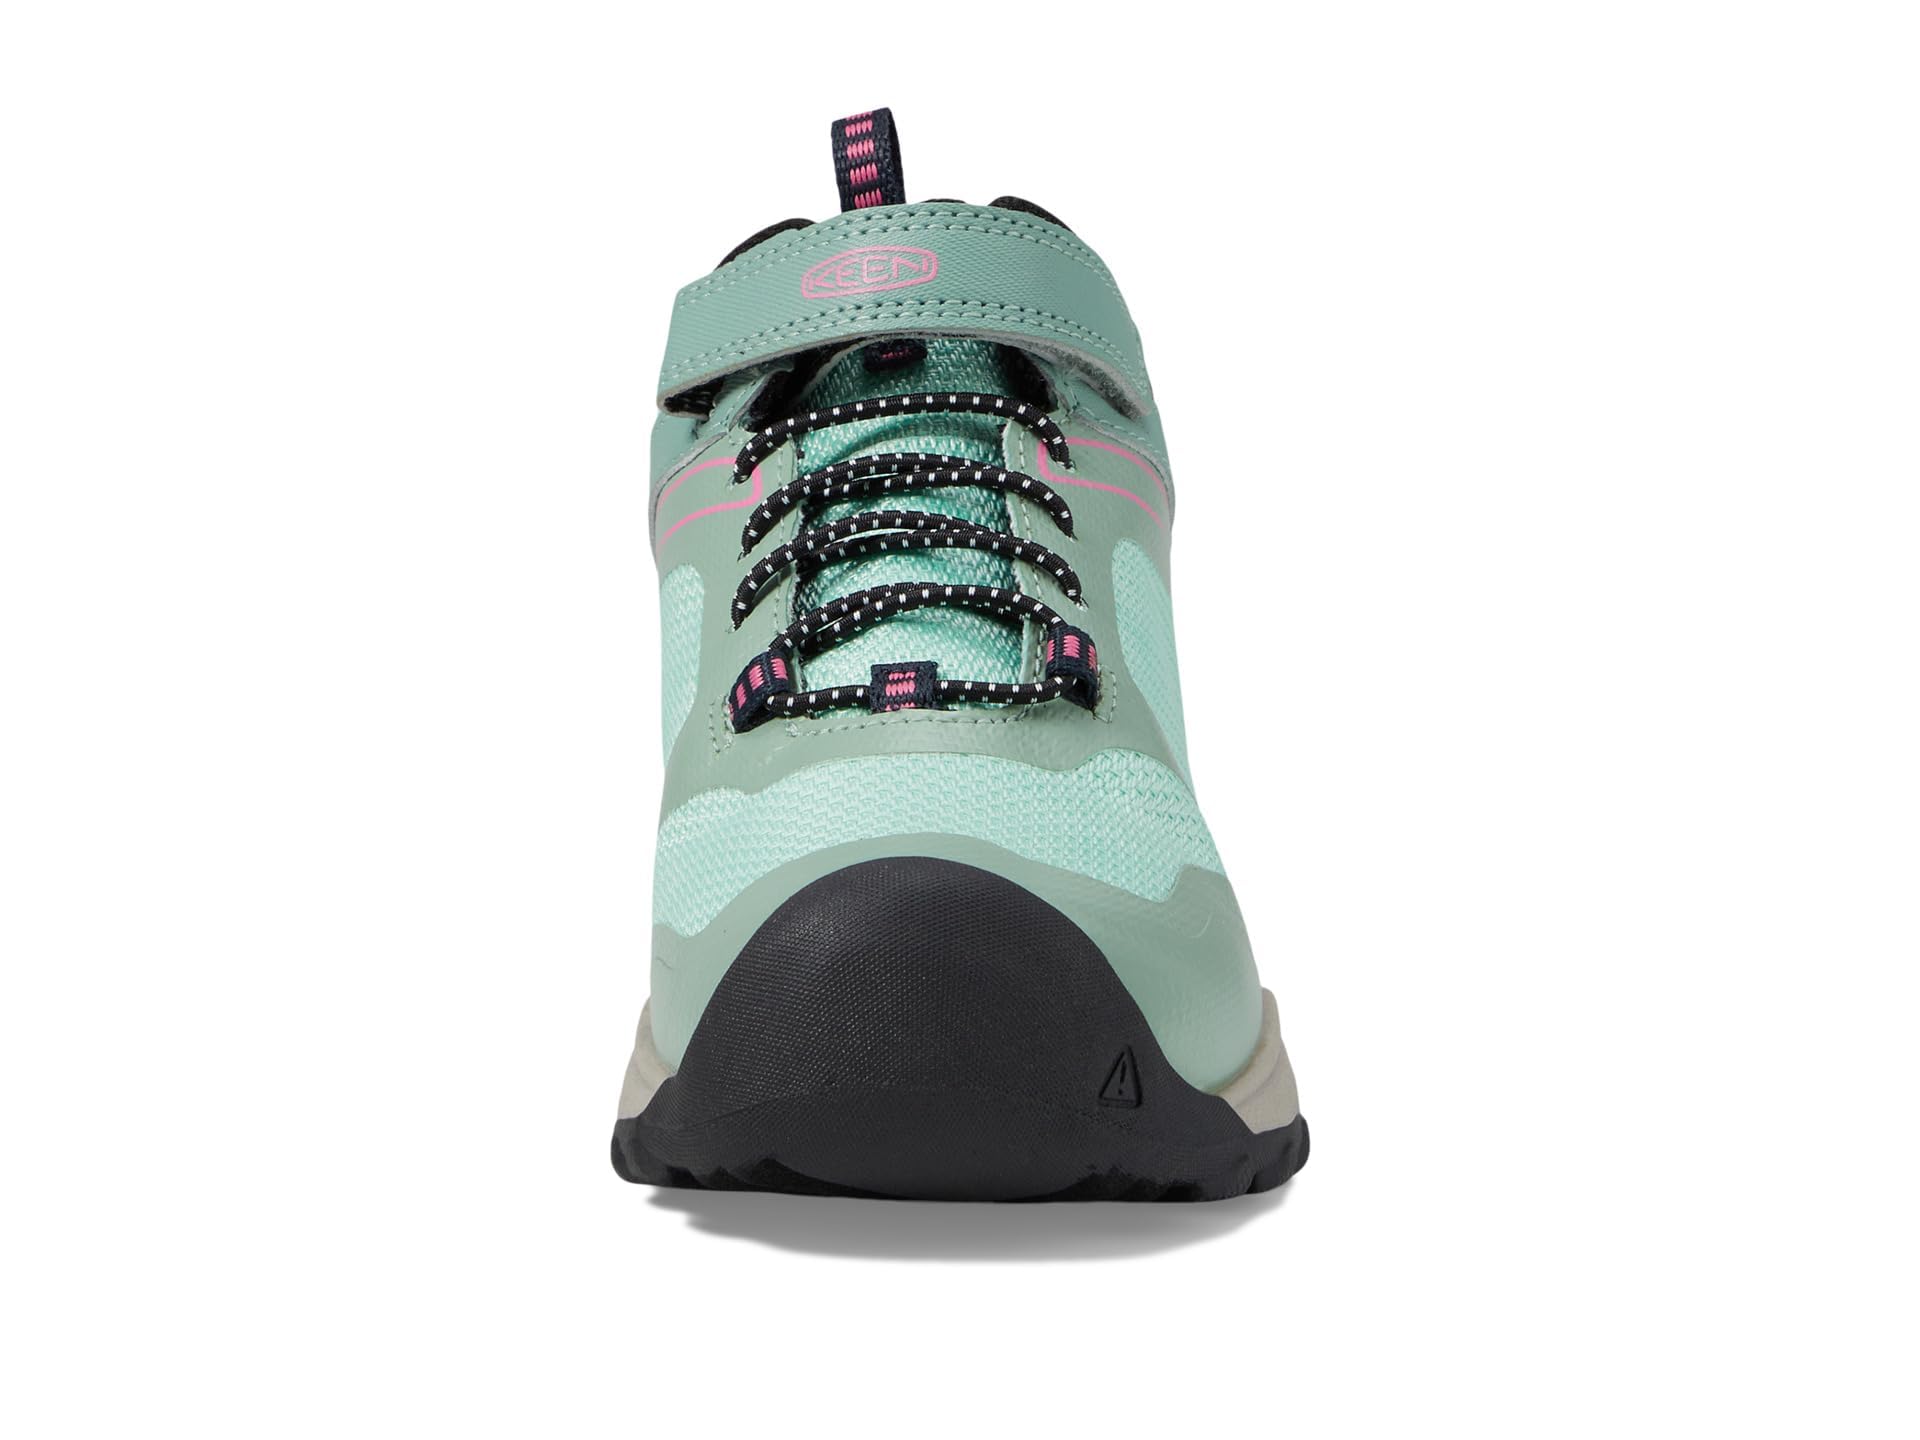 KEEN Wanduro Mid Height Waterproof Easy On Durable Sneaker Hiking Boots, Granite Green/Ibis Rose, 13 US Unisex Little Kid